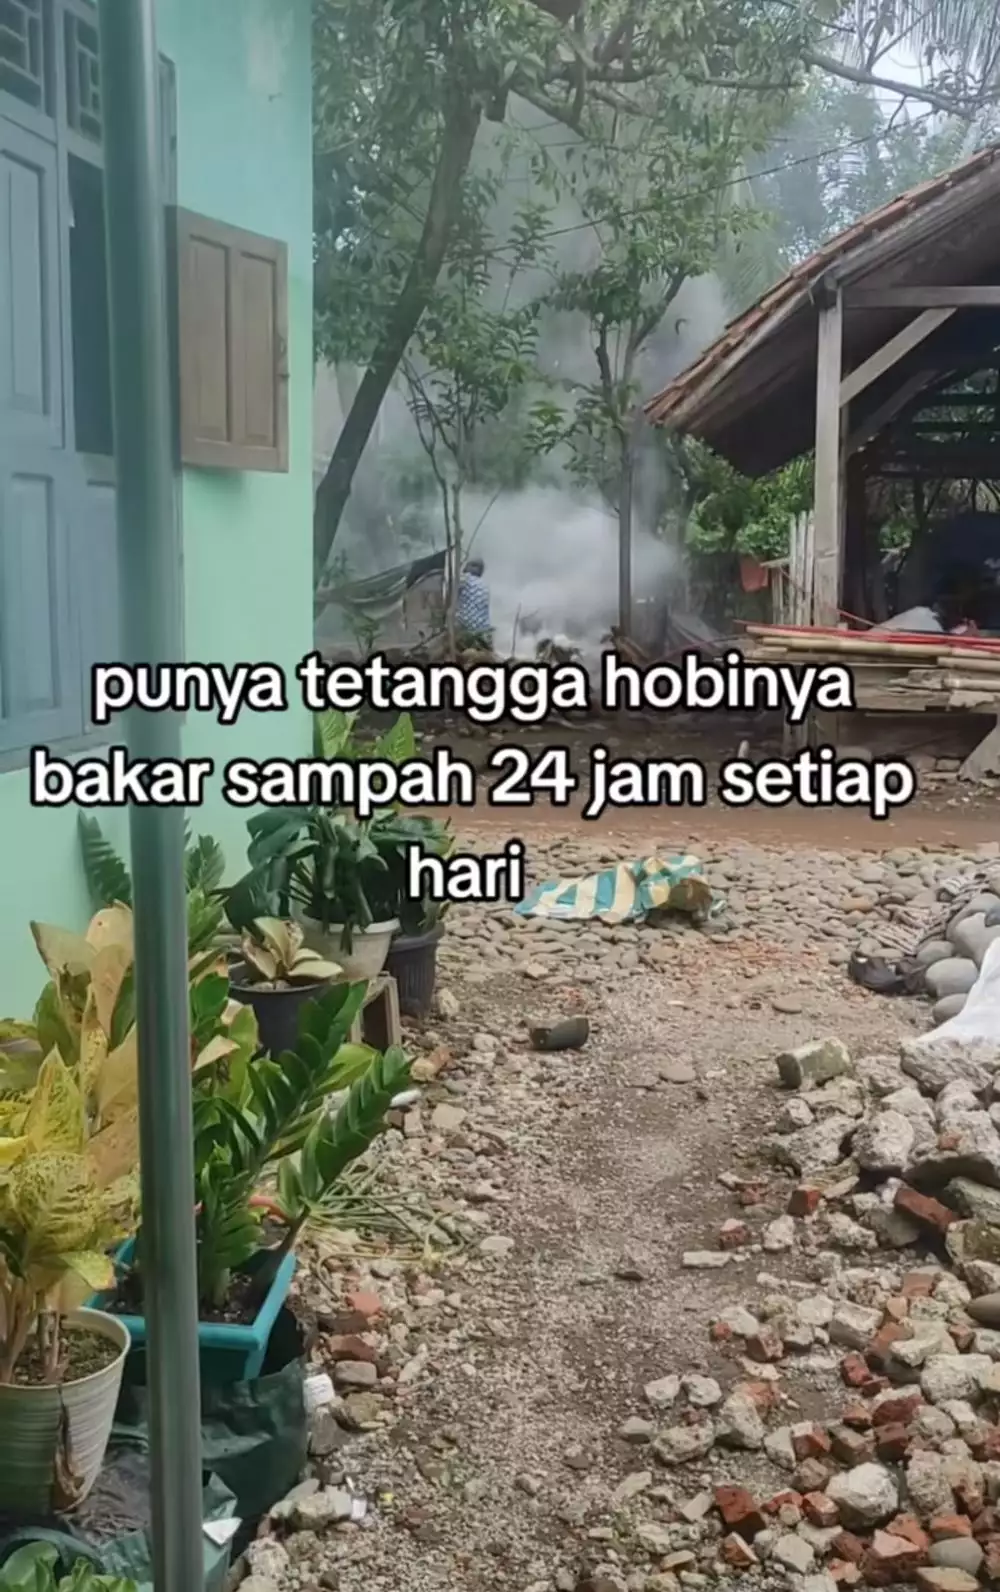 Neighbors burn TikTok trash